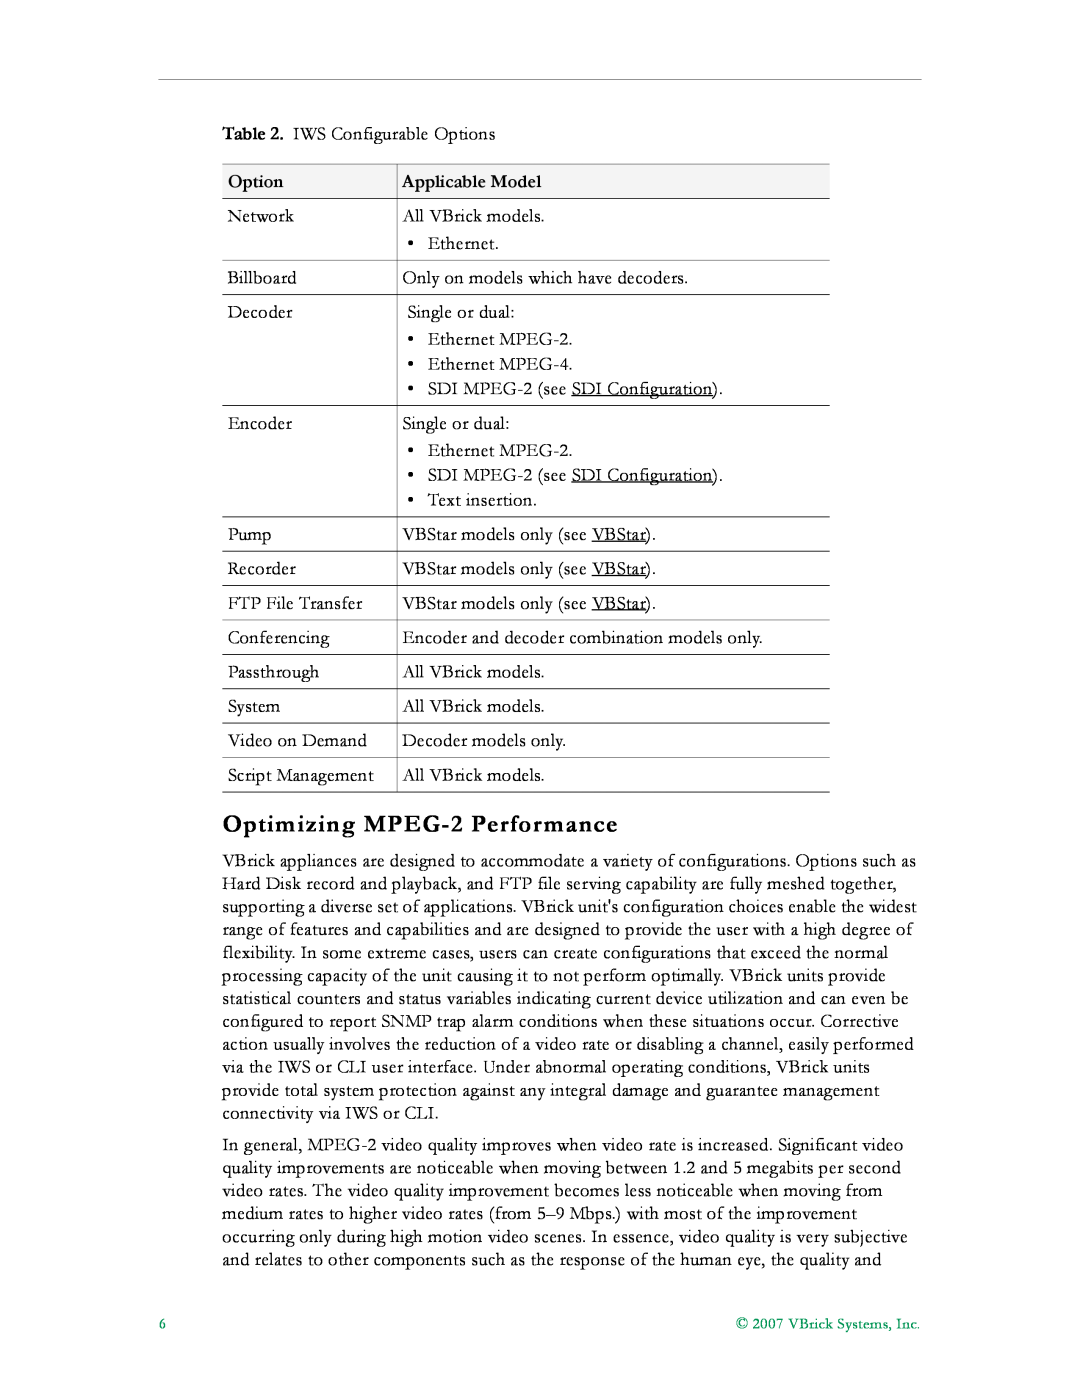 VBrick Systems VB5000, VB6000, VB4000 manual Optimizing MPEG-2 Performance, Option, Applicable Model 